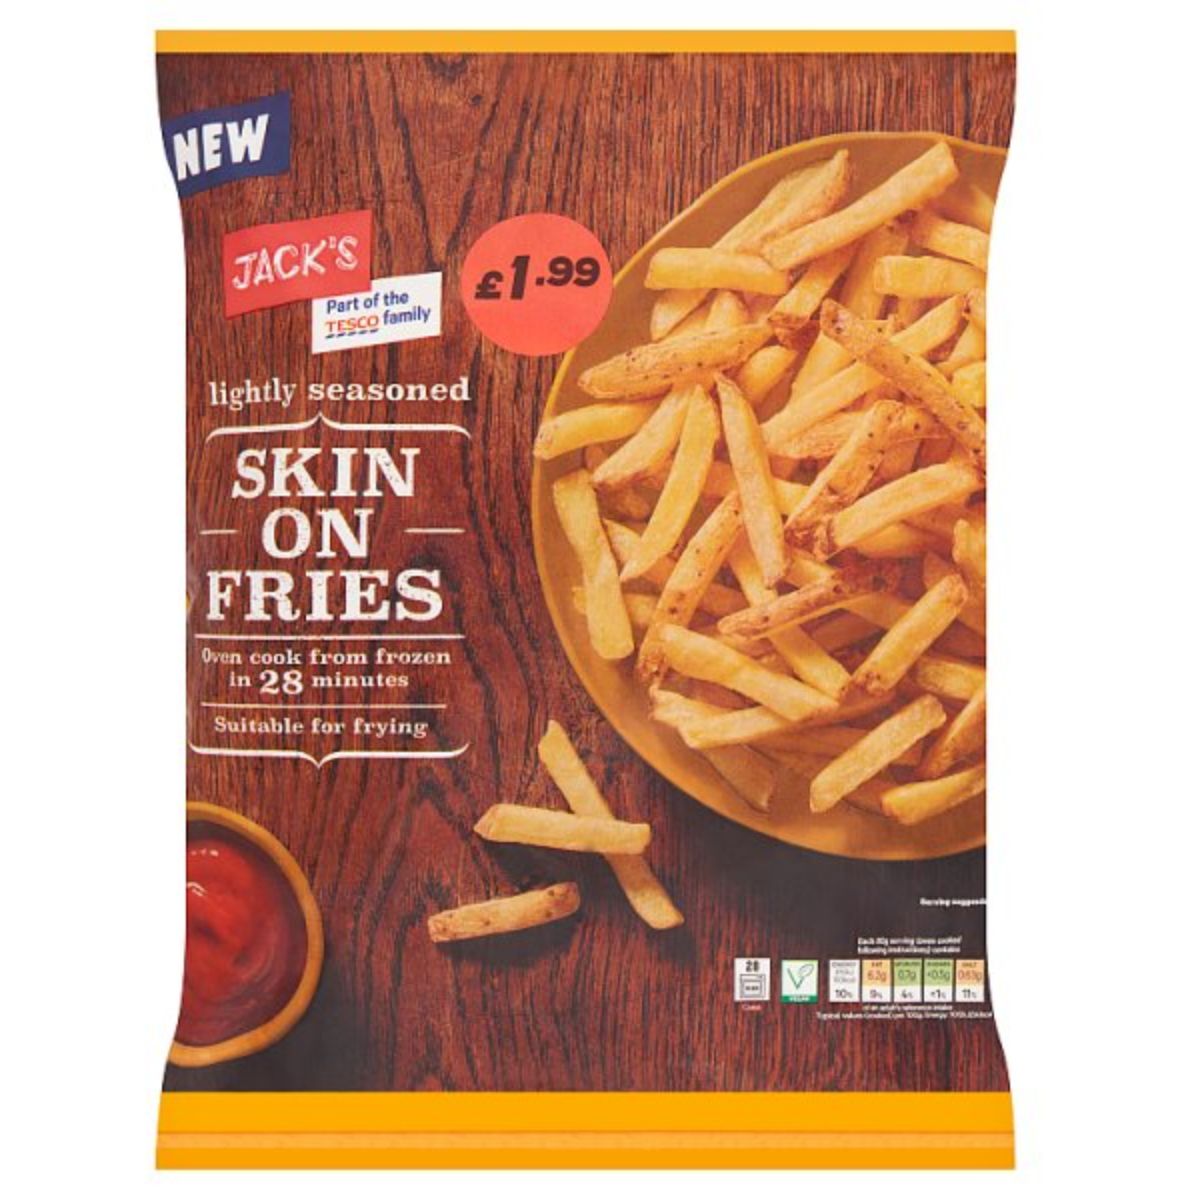 Jacks - Skin on Fries - 750g in a bag.